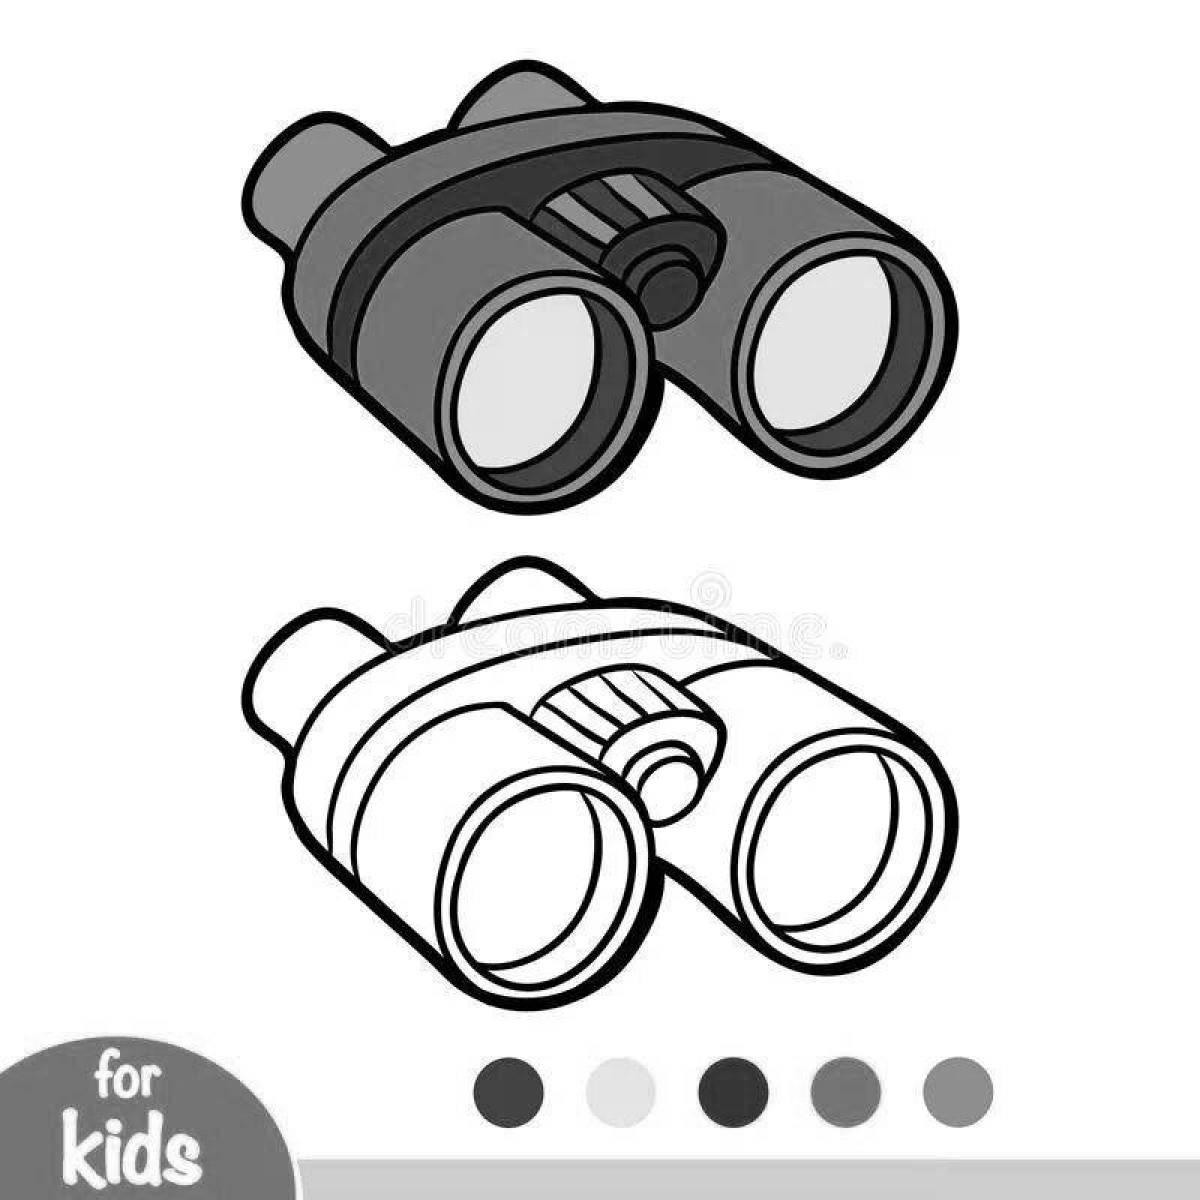 Adorable binoculars coloring page